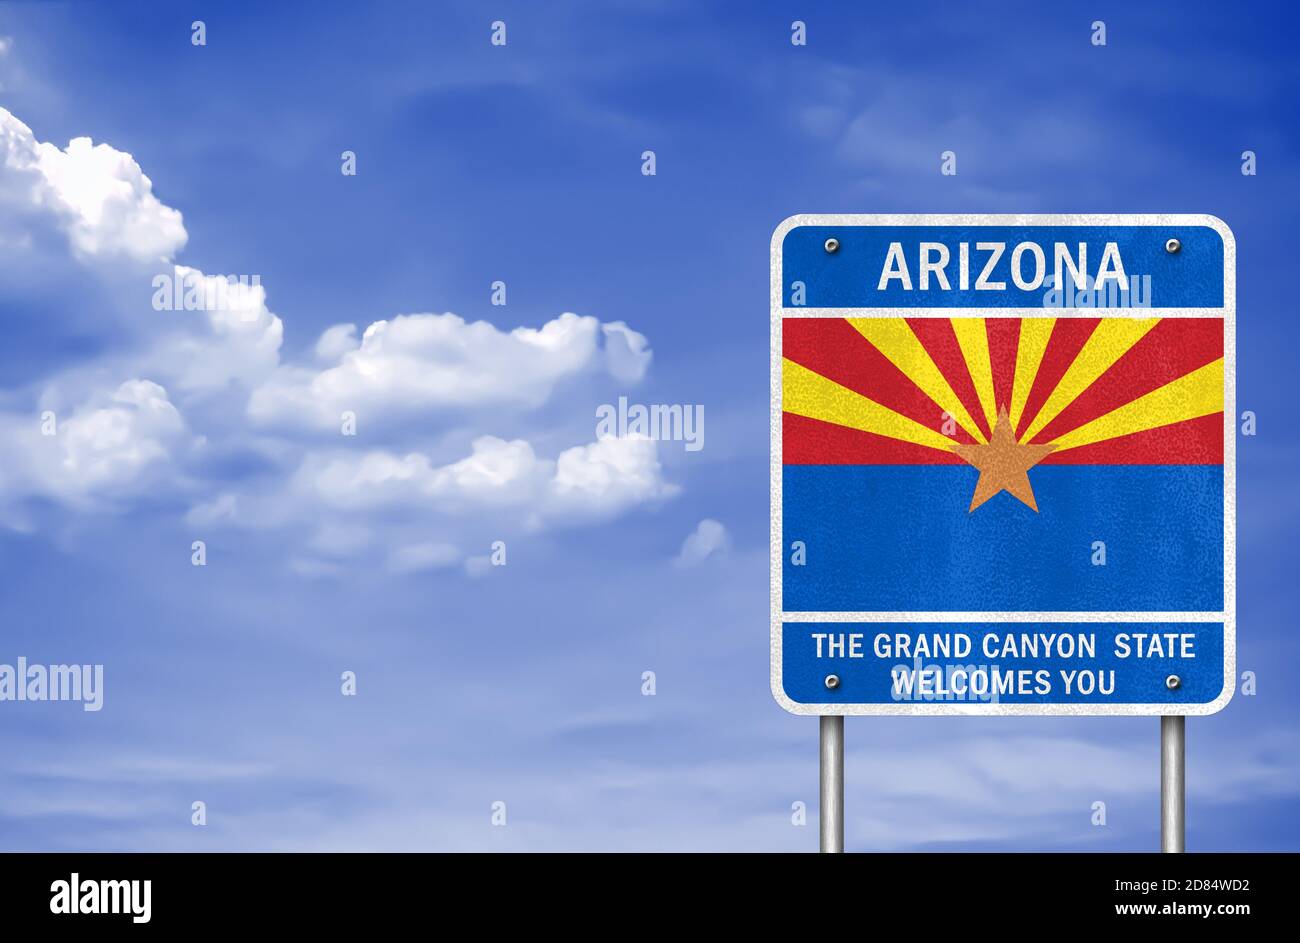 Welcome to Arizona state Stock Photo